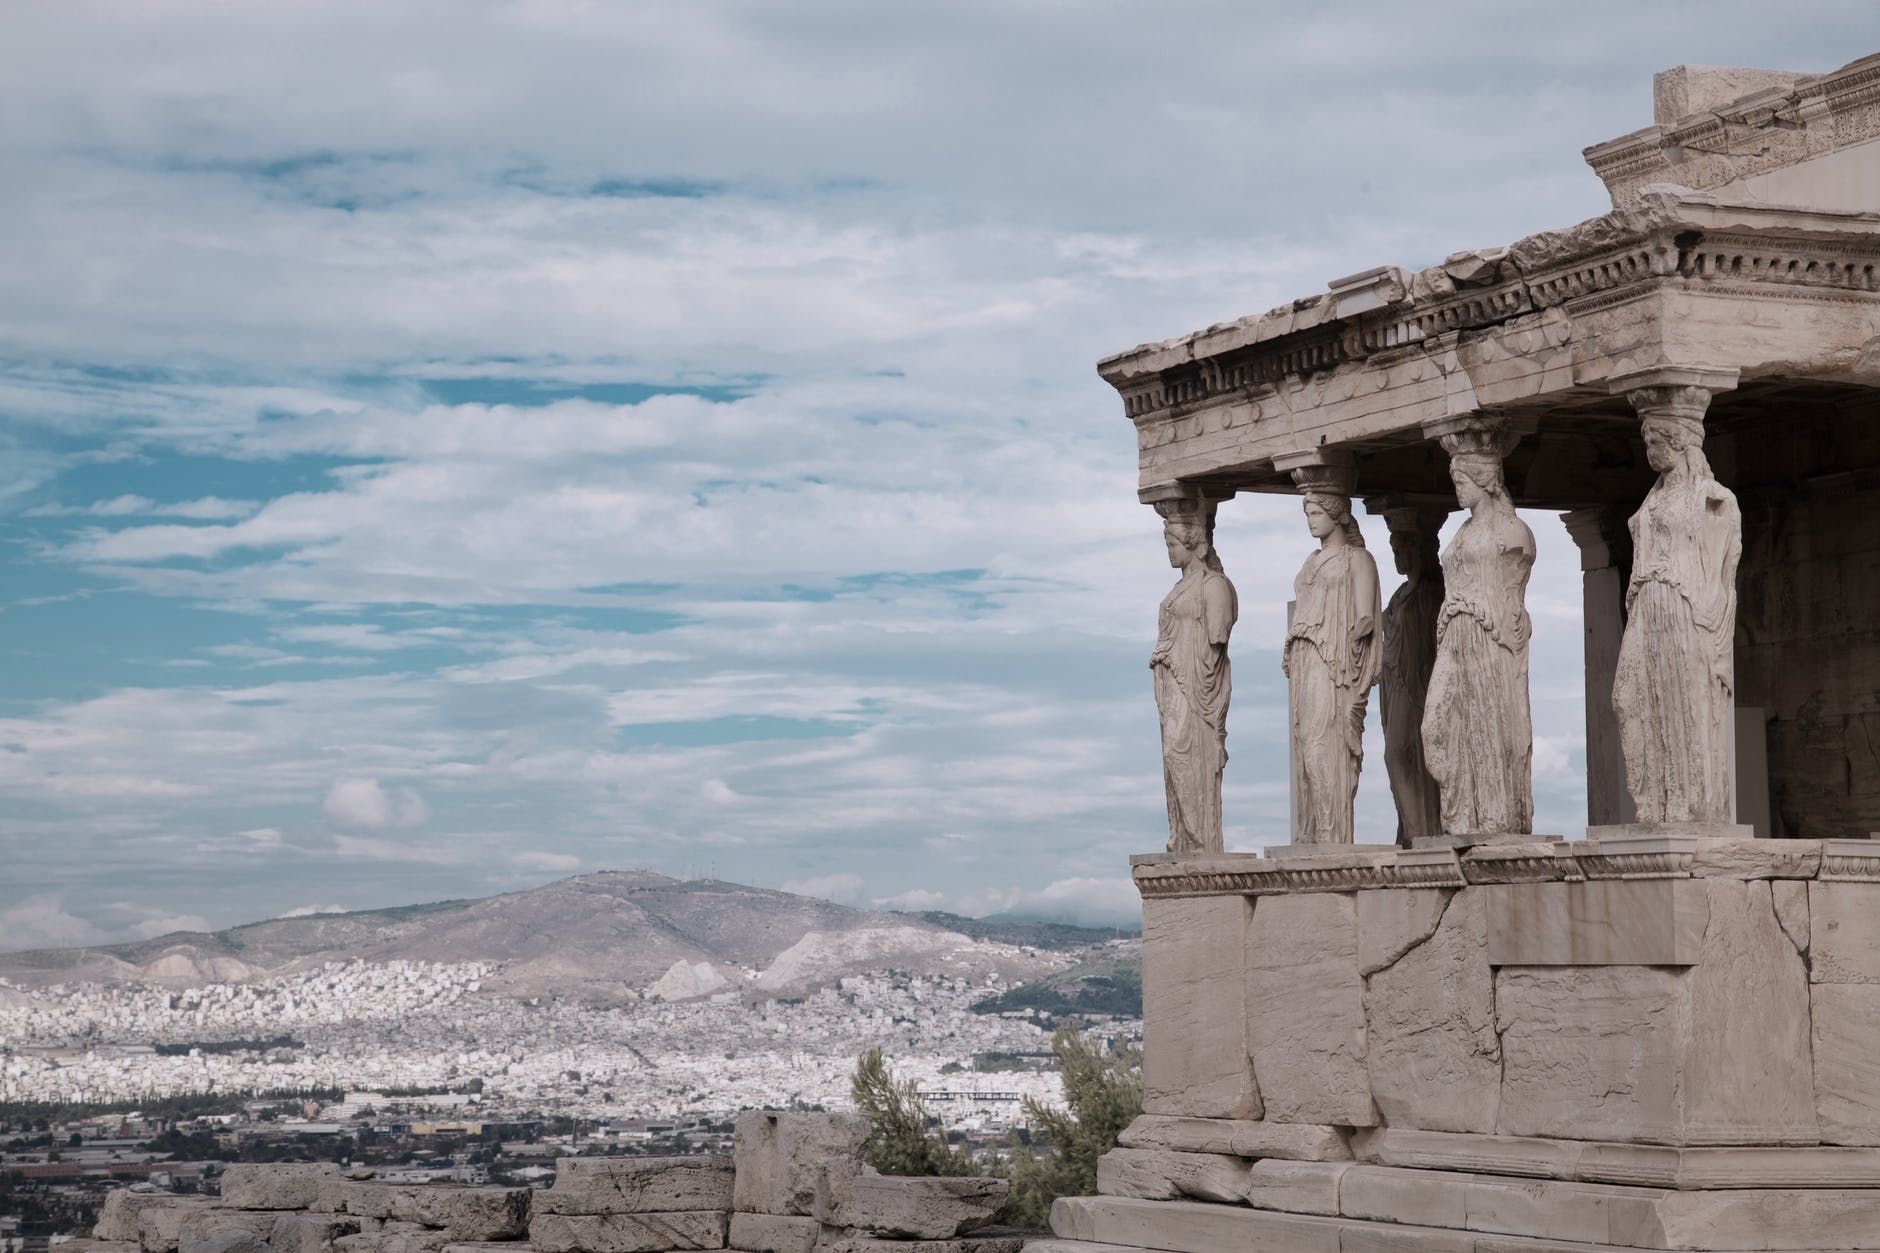 ancient greek temple